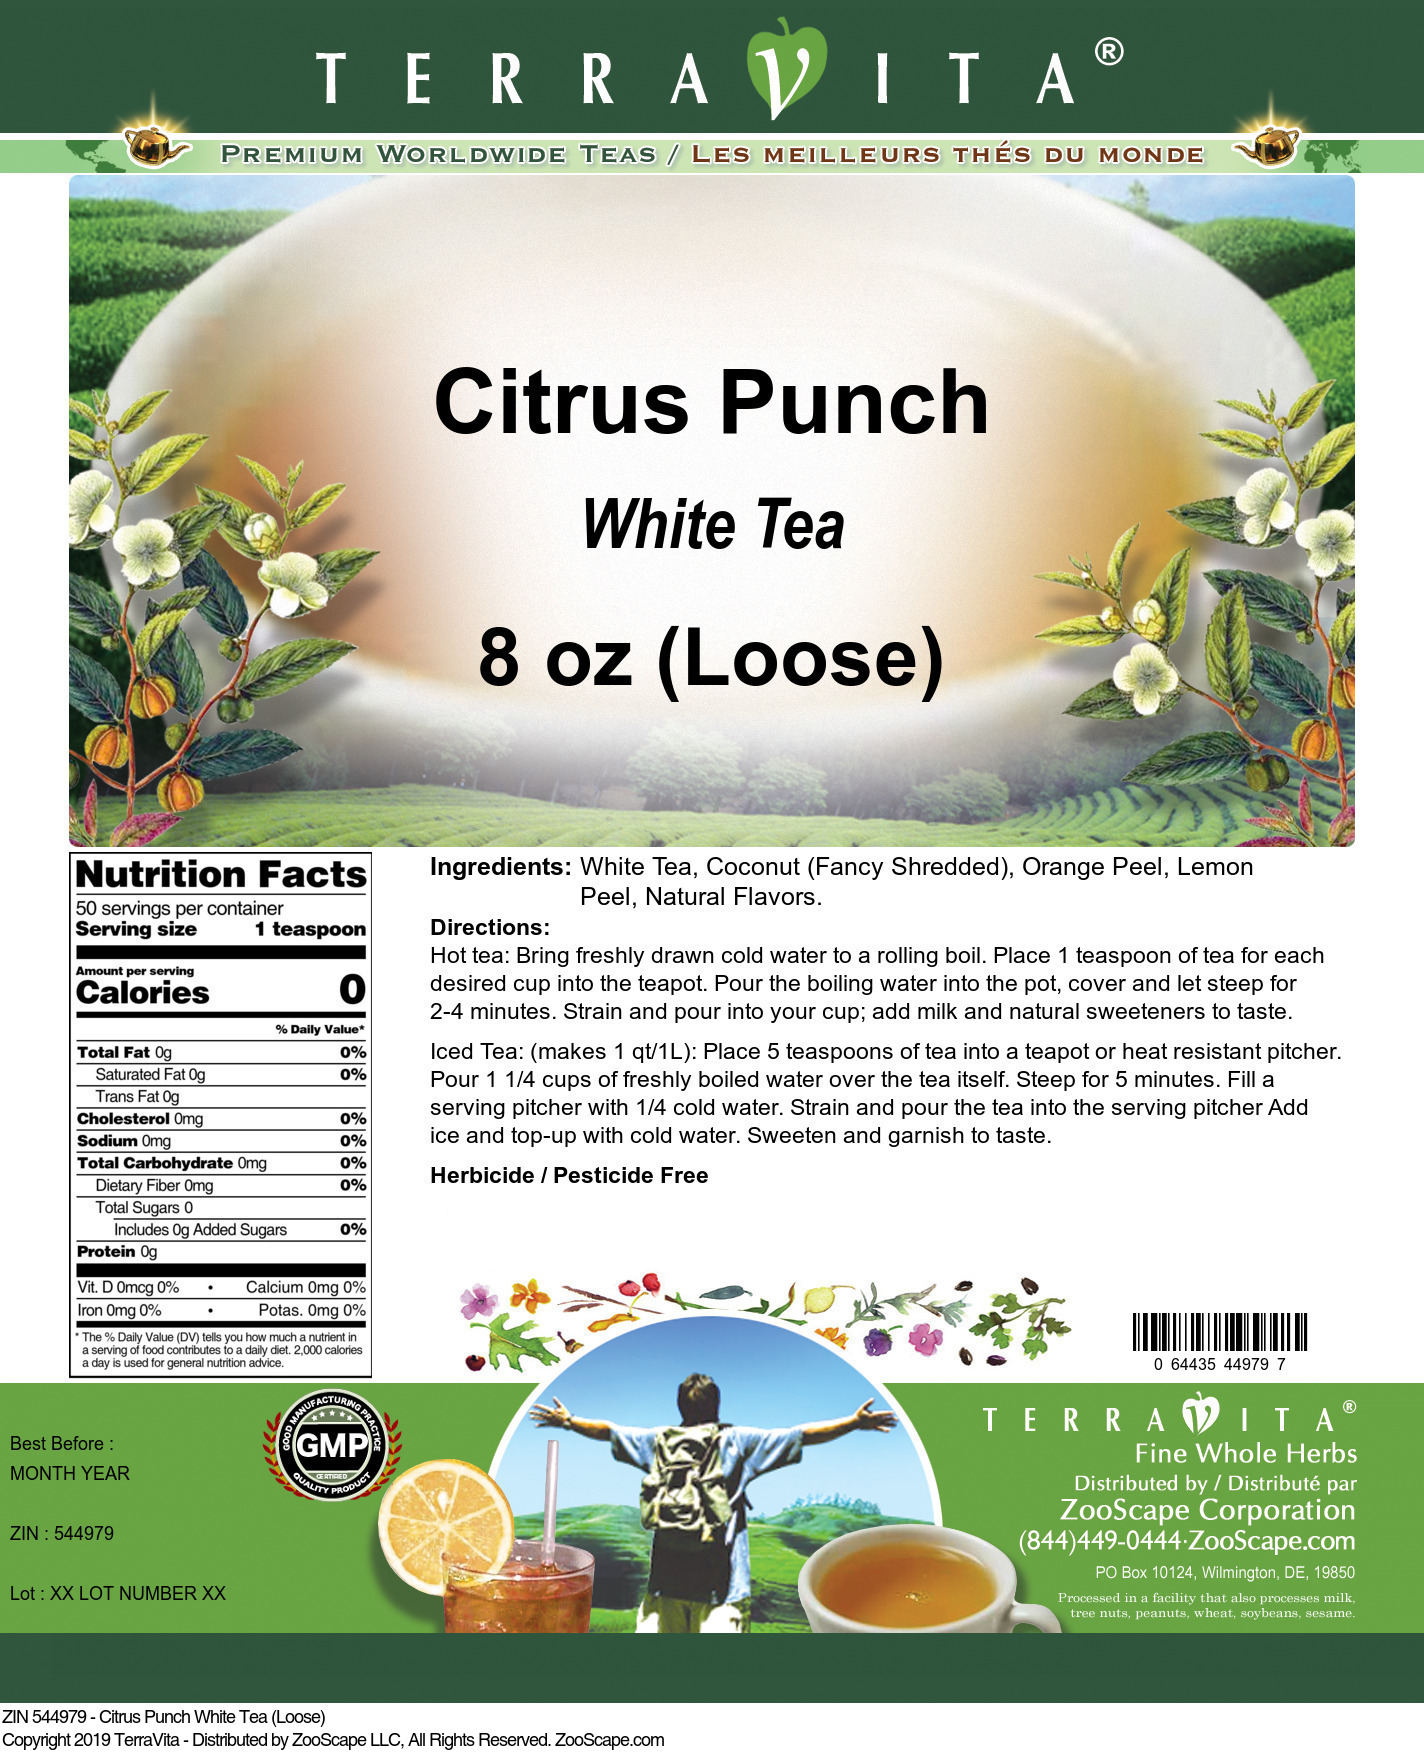 Citrus Punch White Tea (Loose) - Label